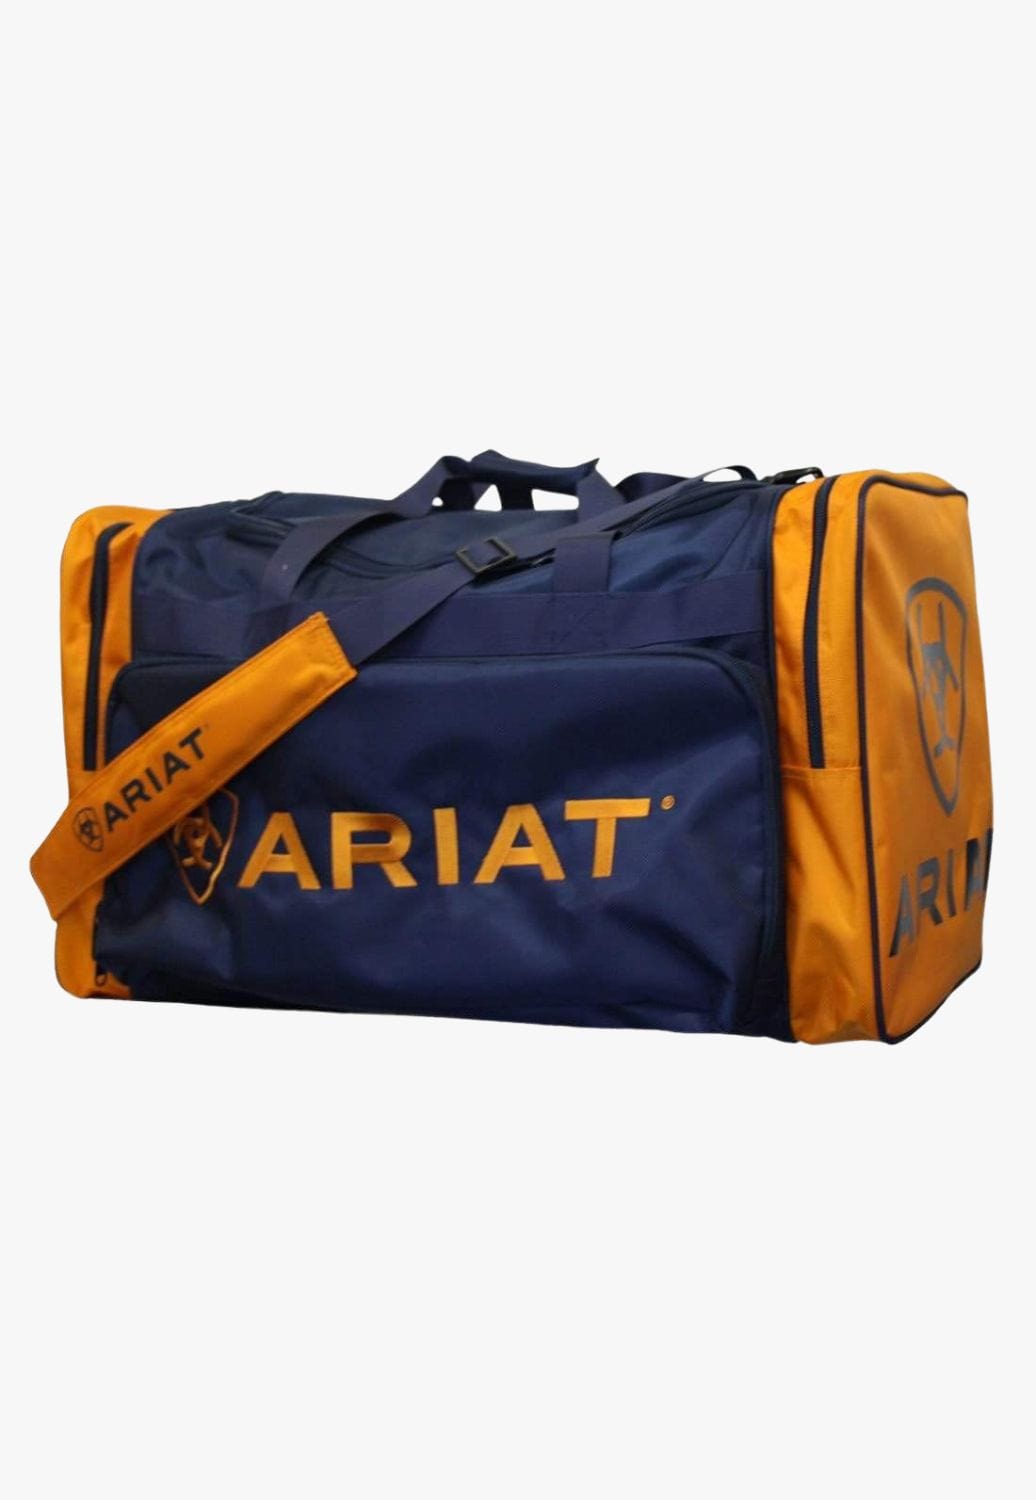 Ariat TRAVEL - Travel Bags Orange/Navy Ariat Gear Bag